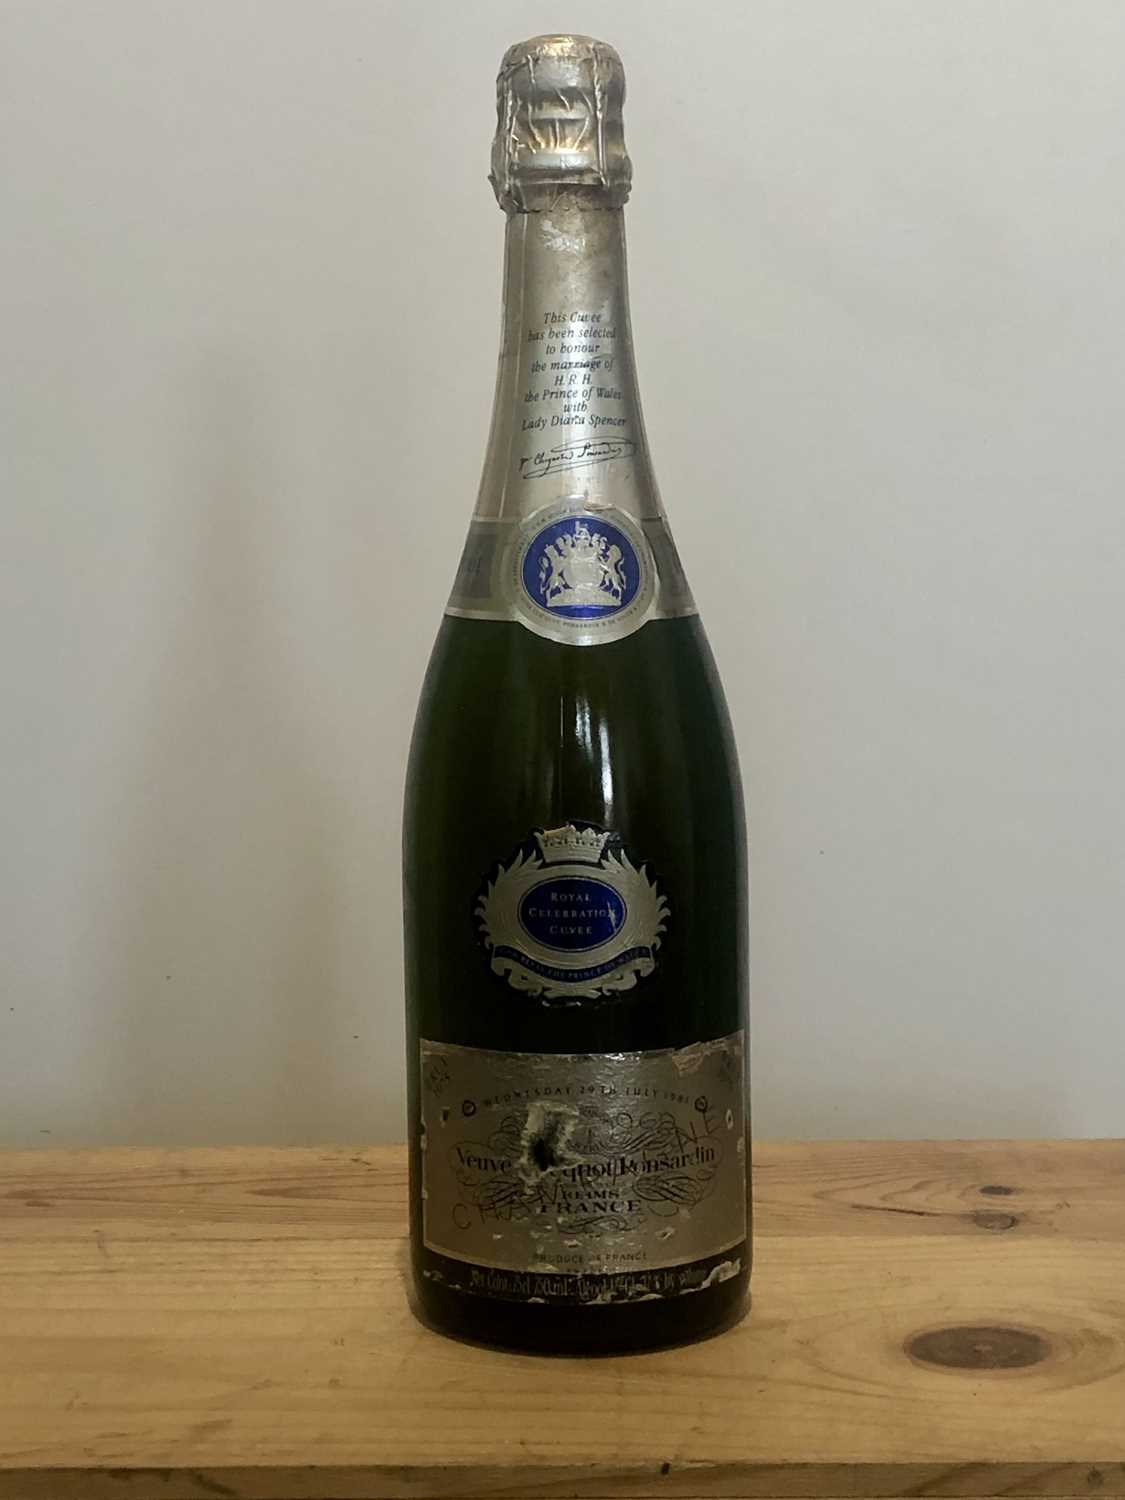 Lot 67 - 1 Bottle Vintage Champagne Brut Veuve Clicquot Ponsardin Royal Celebration Cuvee 1975